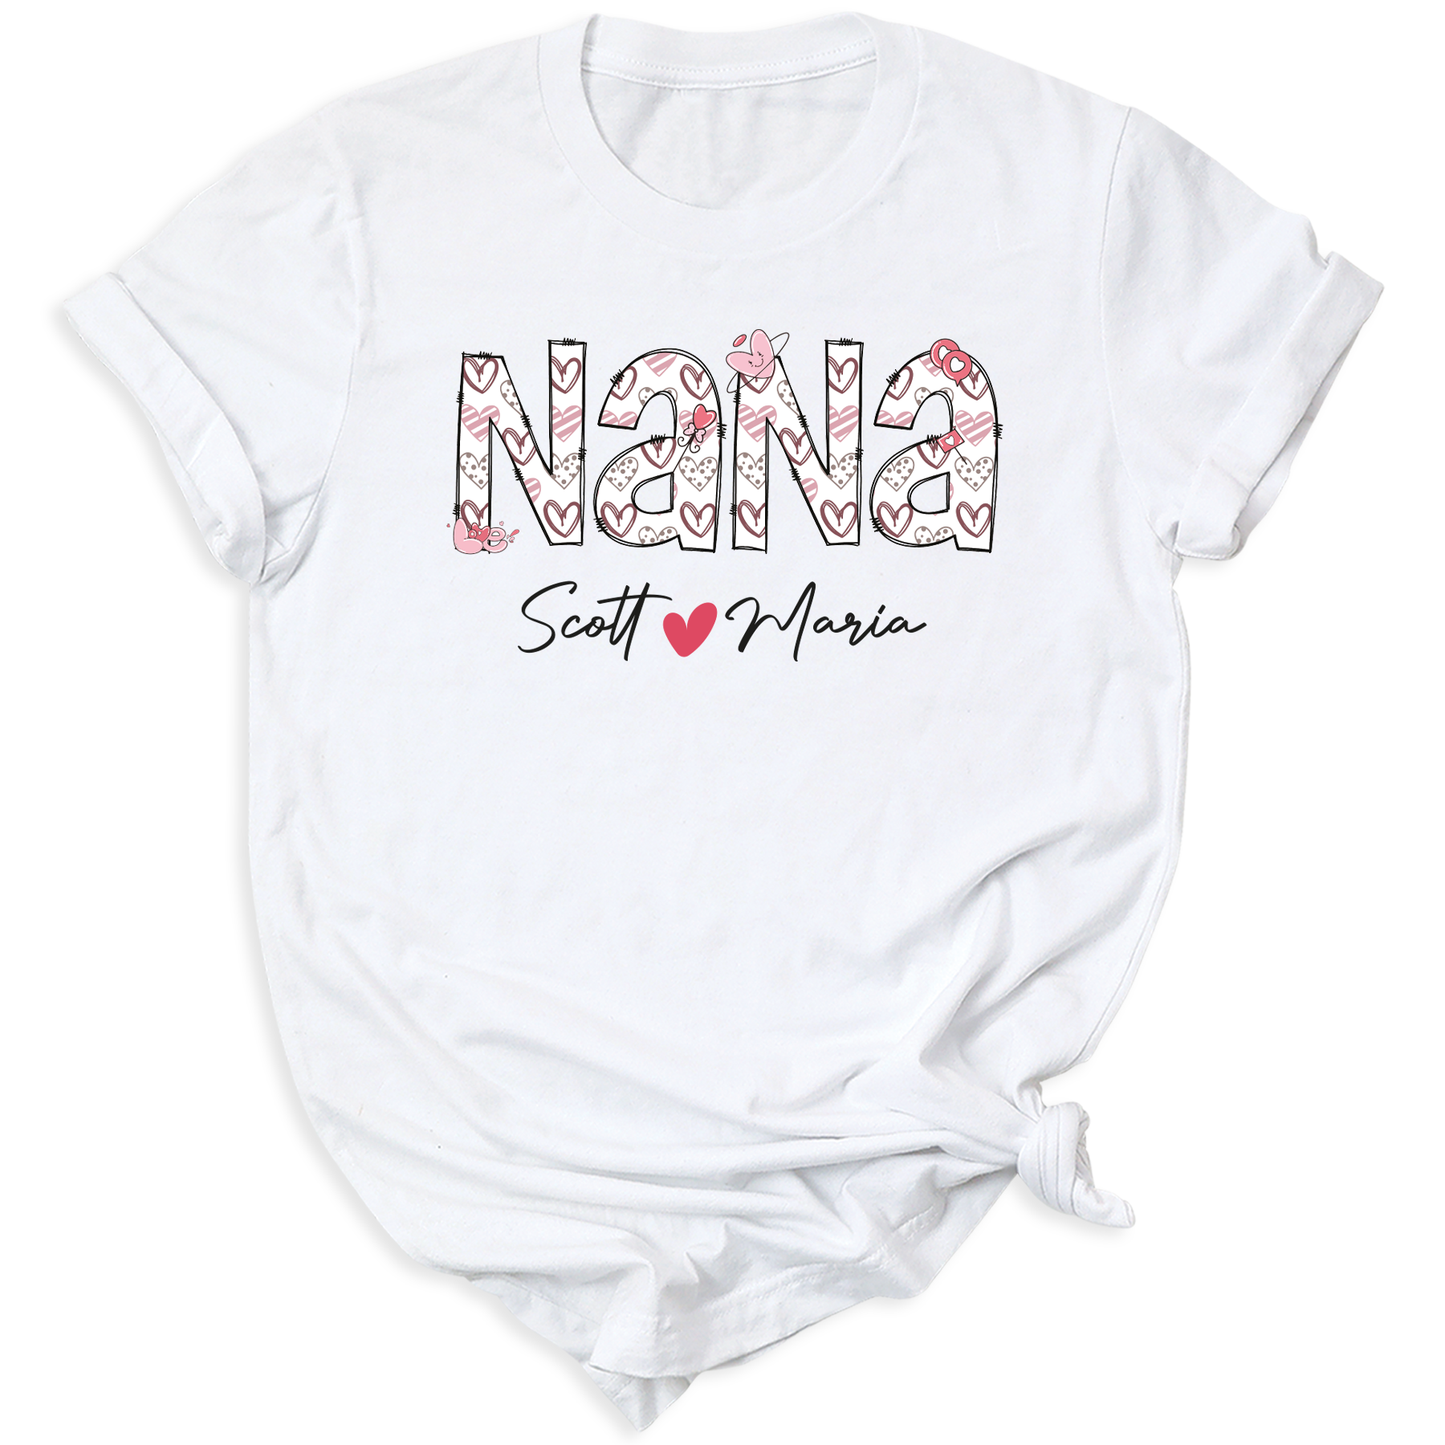 Nana Personalize T-Shirt